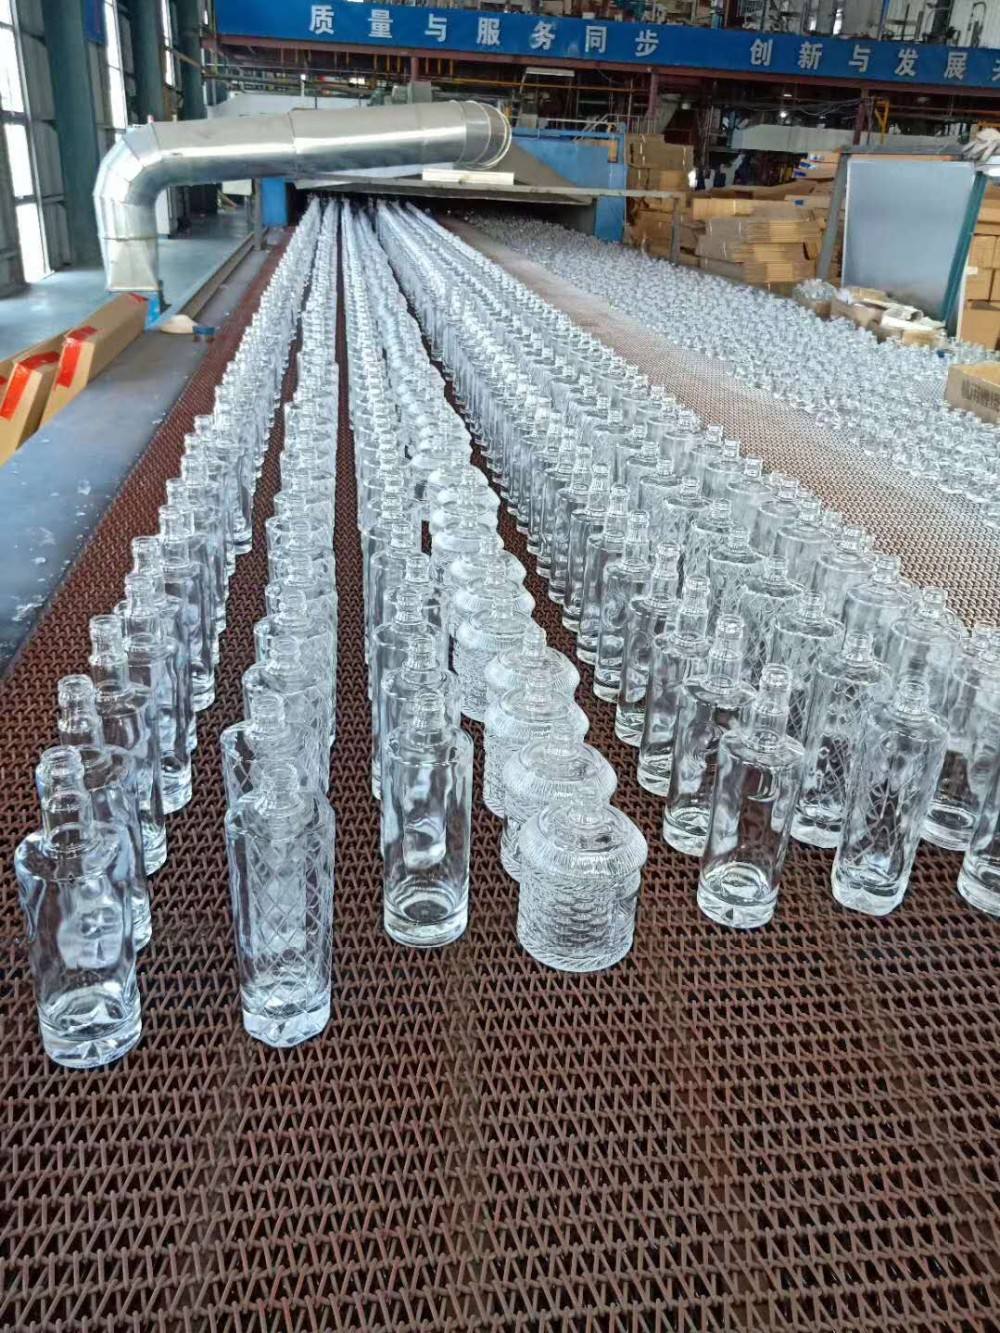 500Ml 1000Ml 700Ml 375Ml 750Ml Clear Printing Super Flint Screw Cork Top Rum Tequila Vodka Gin Glass Liquor Spirit Bottle